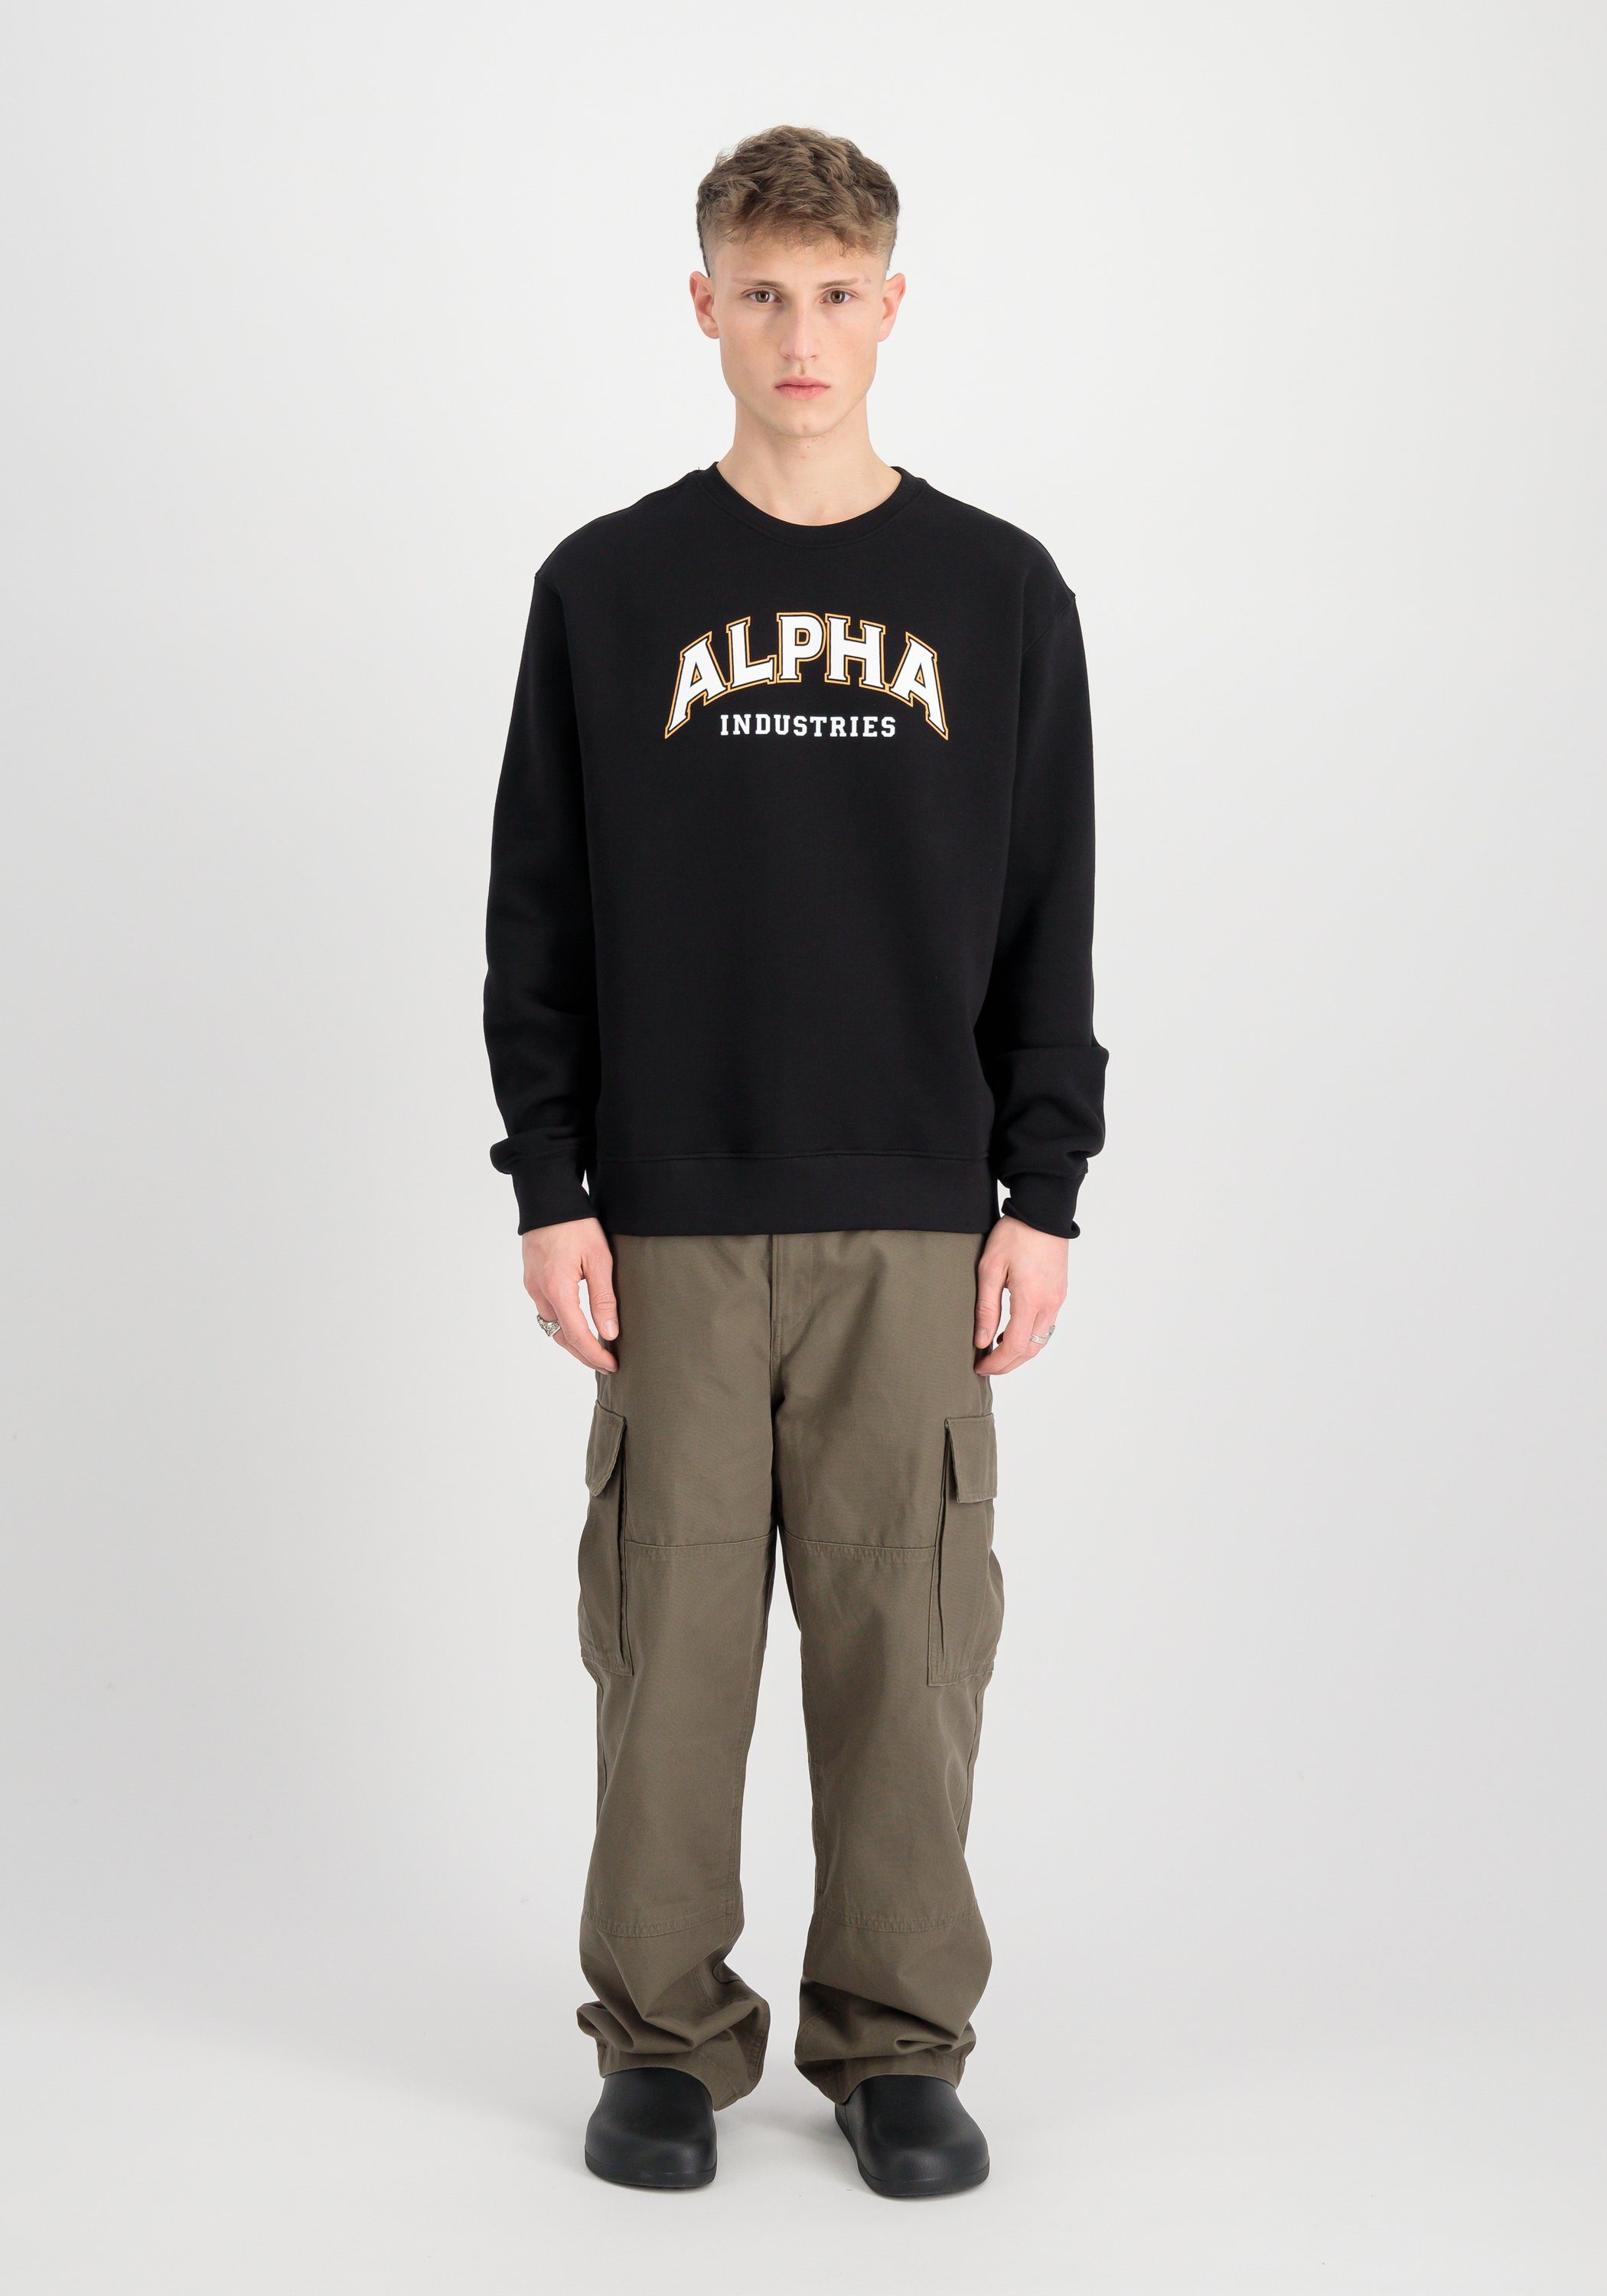 Alpha Industries Sweater Men Sweatshirts College Sweater